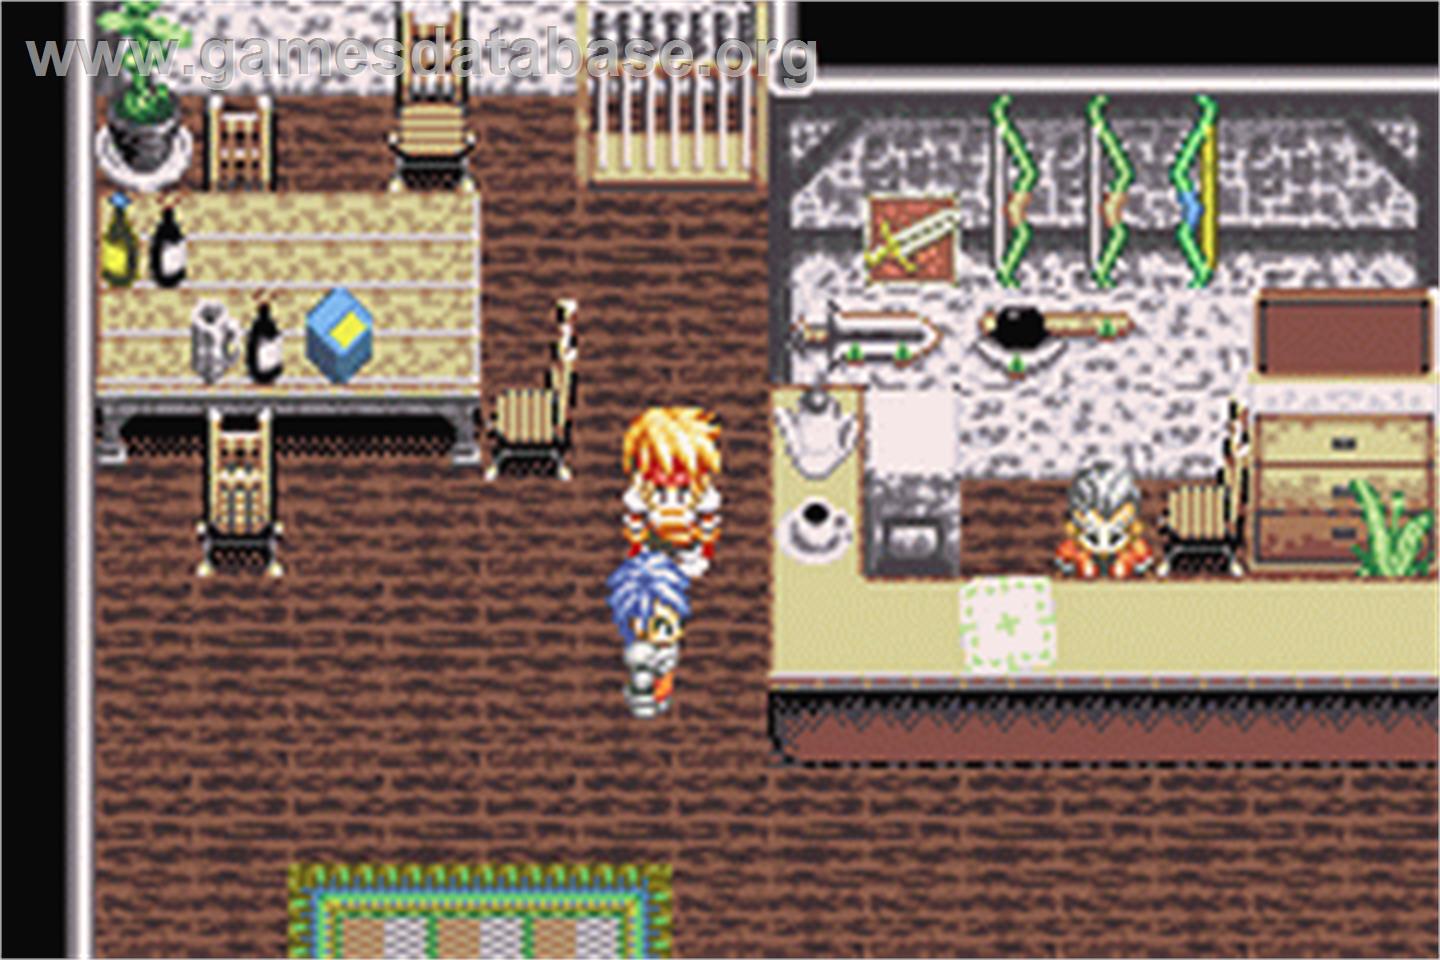 Tales of Phantasia - Nintendo Game Boy Advance - Artwork - In Game